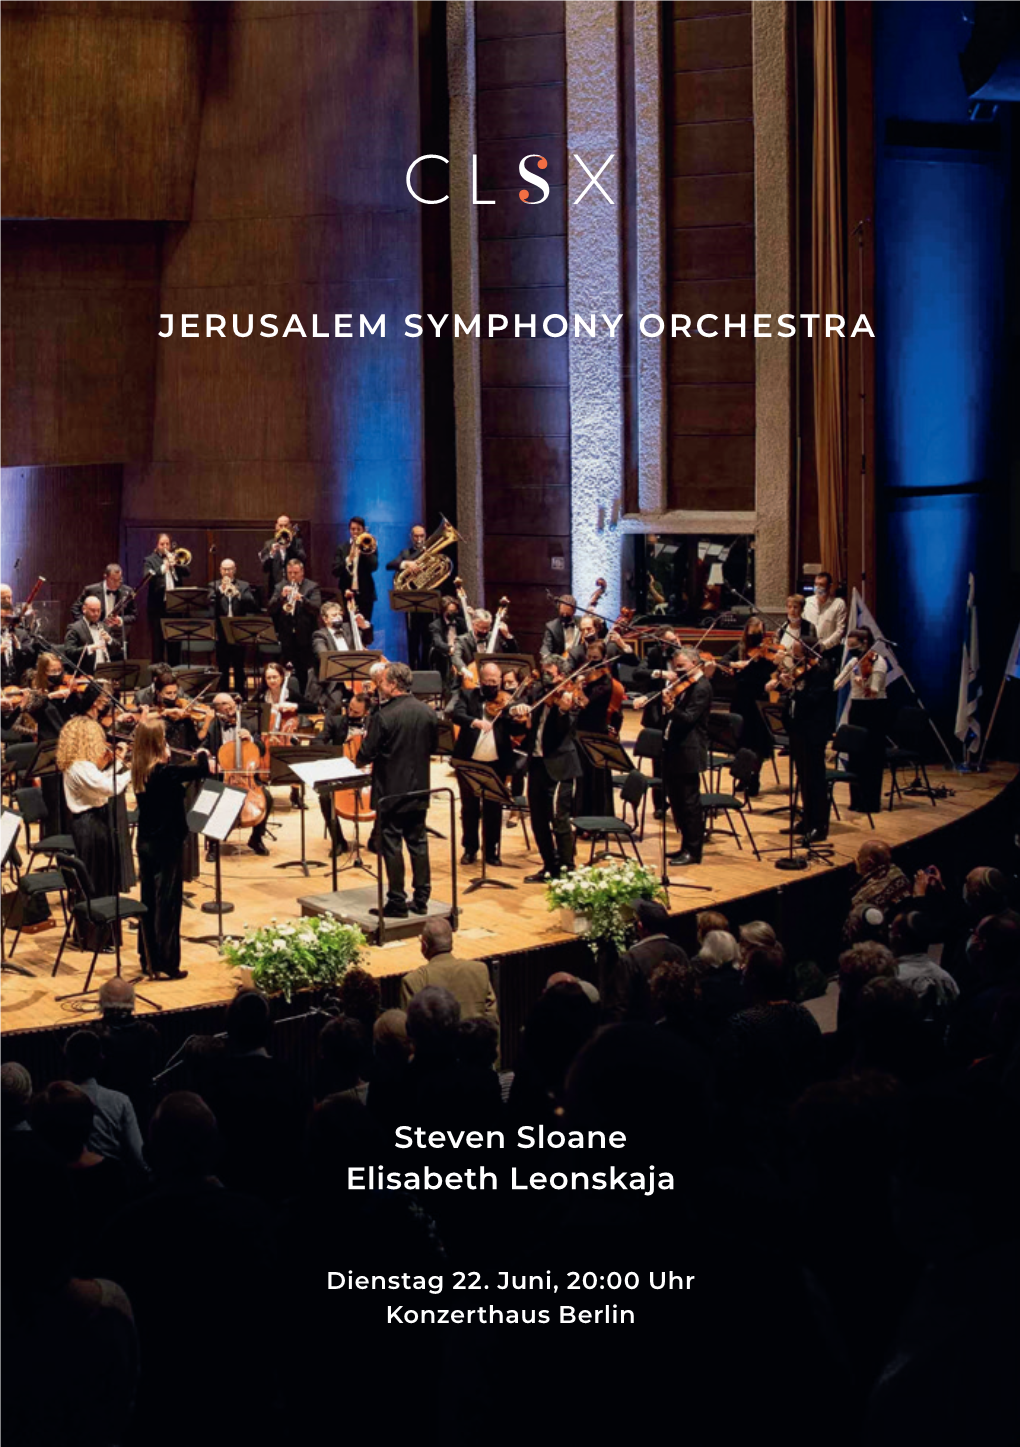 Jerusalem Symphony Orchestra Steven Sloane, Dirigent/Conductor Elisabeth Leonskaja, Klavier/Piano